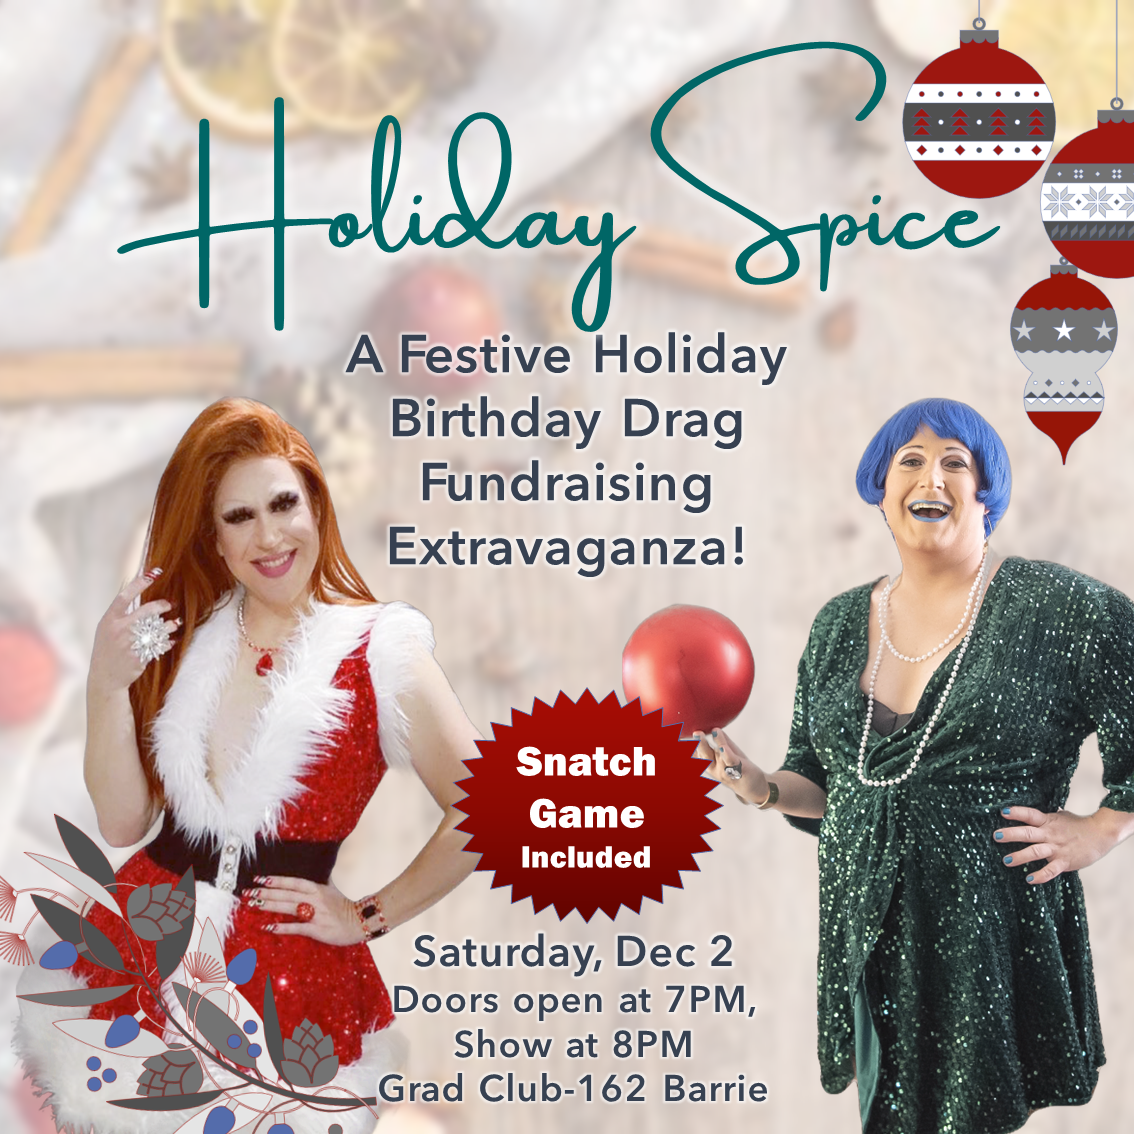 Holiday Spice: A festive holiday birthday drag fundraising extravaganza